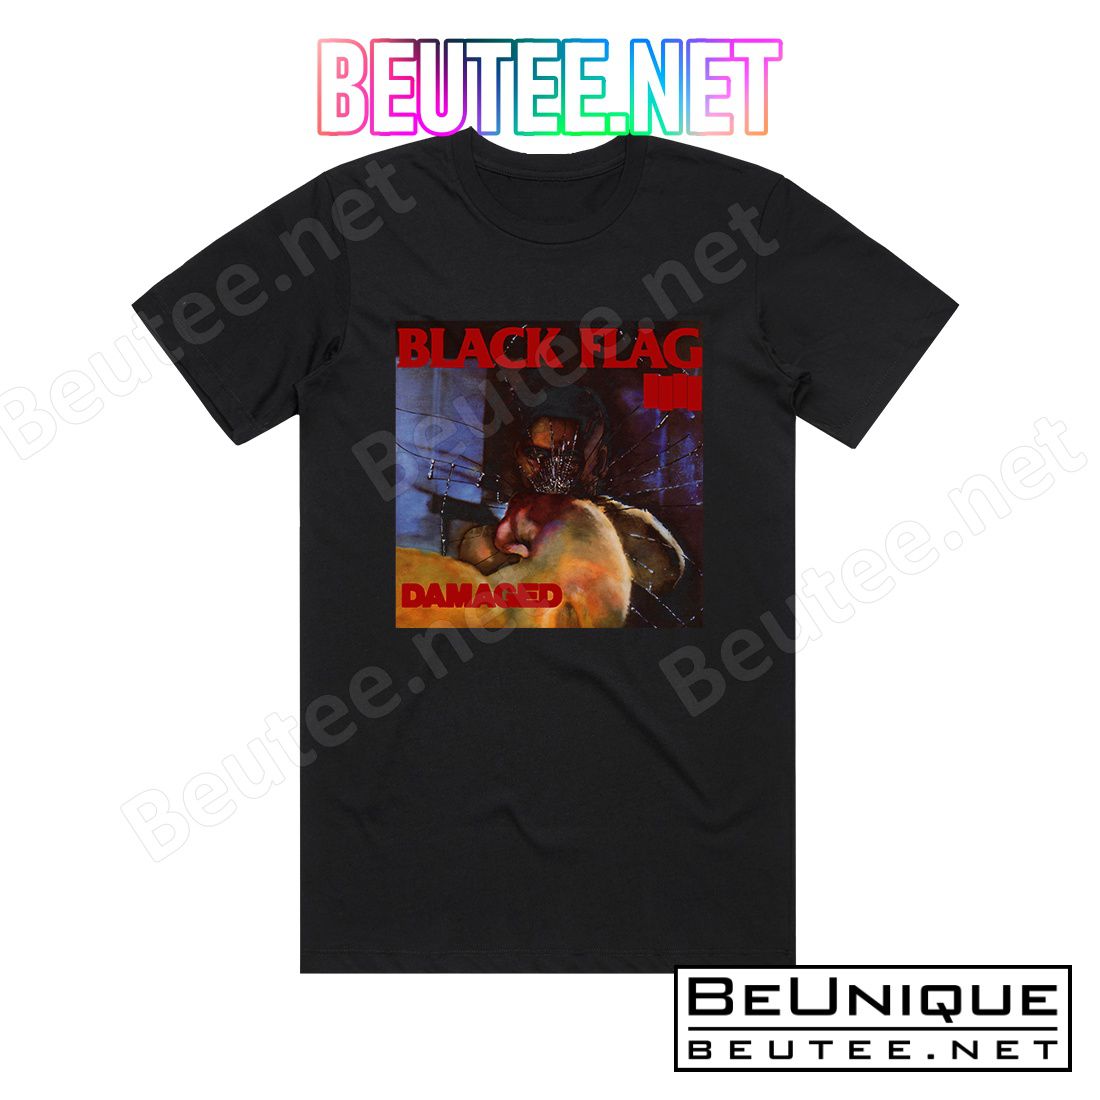 Black Flag Damaged 1 Album Cover T-Shirt